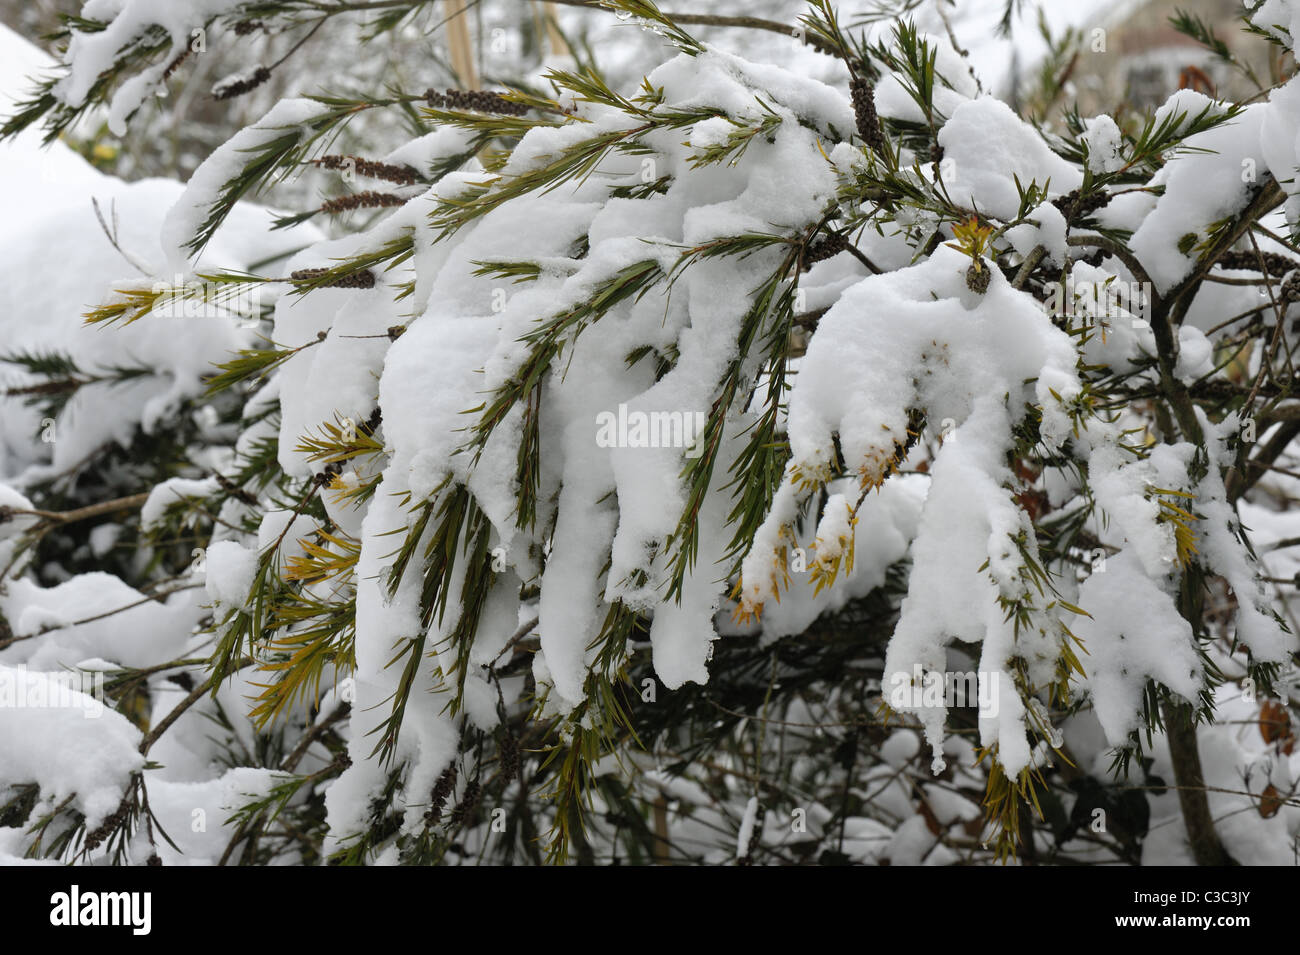 Cepillo de botella australiana (Callistemon rigidus) follaje con cubierta de nieve en invierno Foto de stock